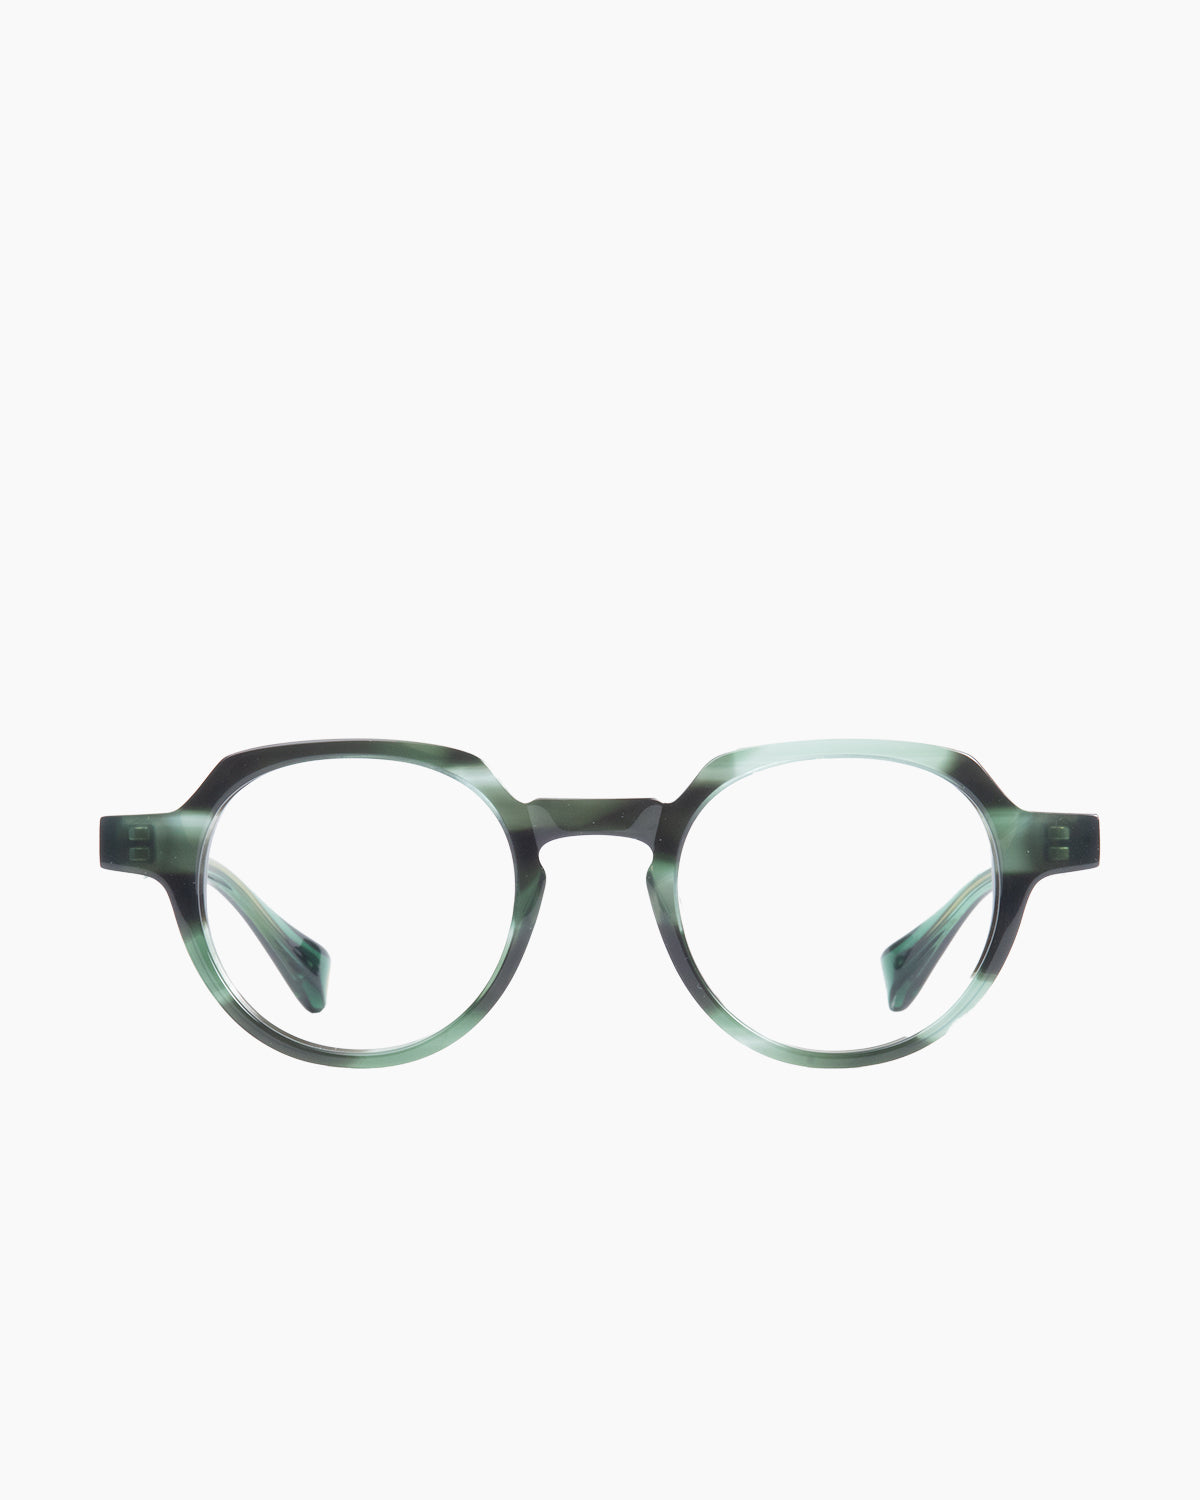 Francois Pinton - Haussmann4 - Gg | glasses bar:  Marie-Sophie Dion